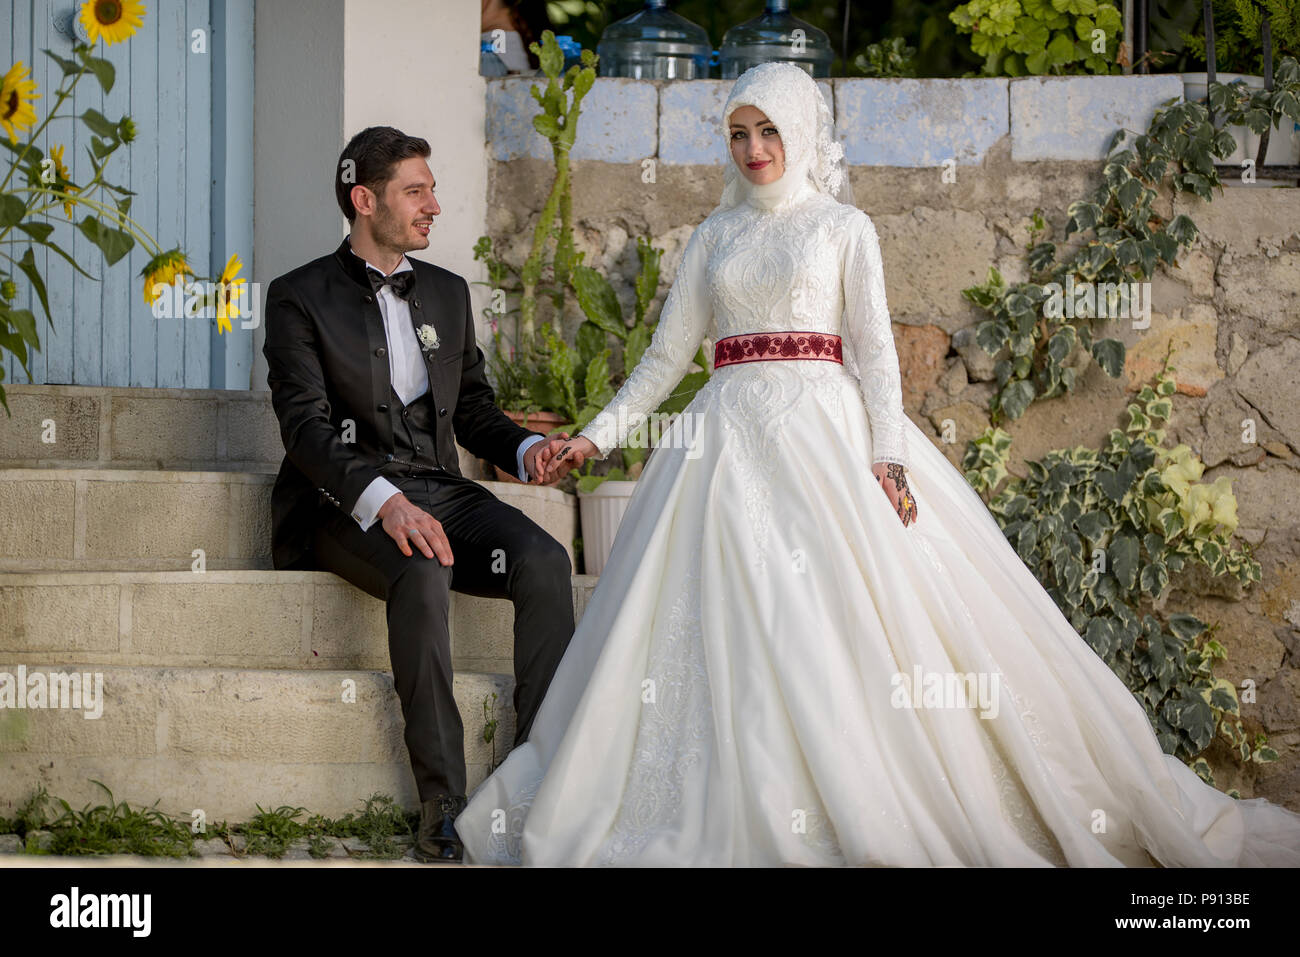 Muslim bride and groom Islamic wedding ceremony Middle Easterner traditional Muslim wedding Stock Photo